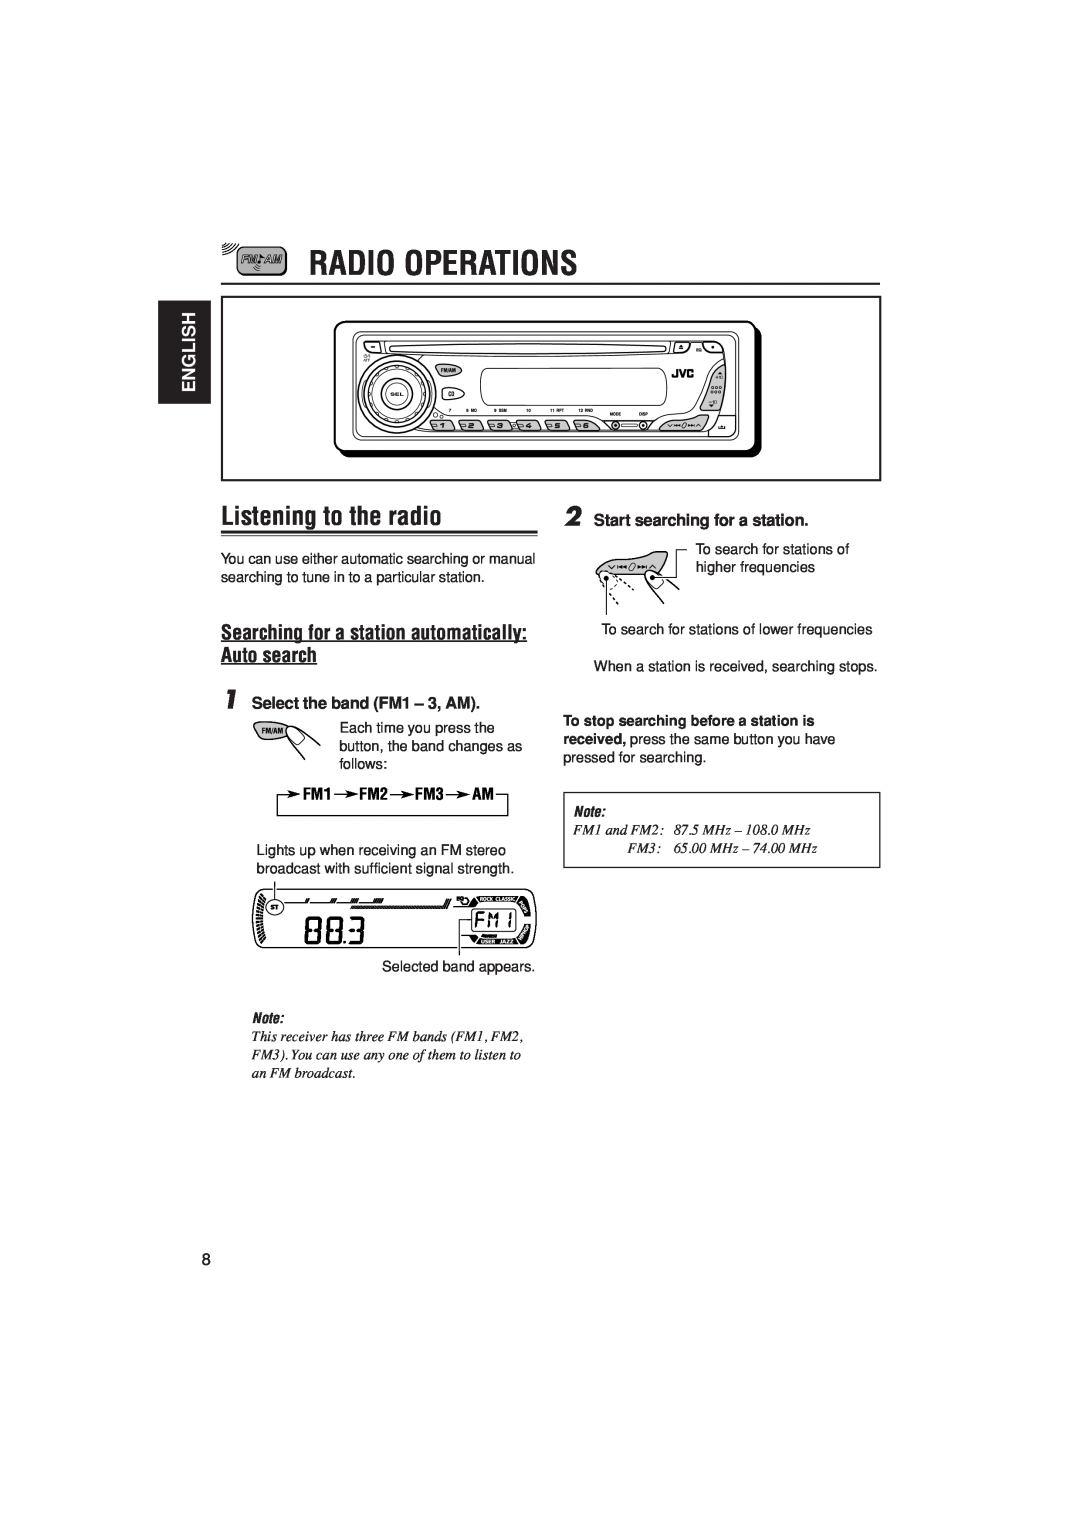 JVC KD-G407 manual Radio Operations, Listening to the radio, English, Select the band FM1 - 3, AM, FM1 FM2 FM3 AM 